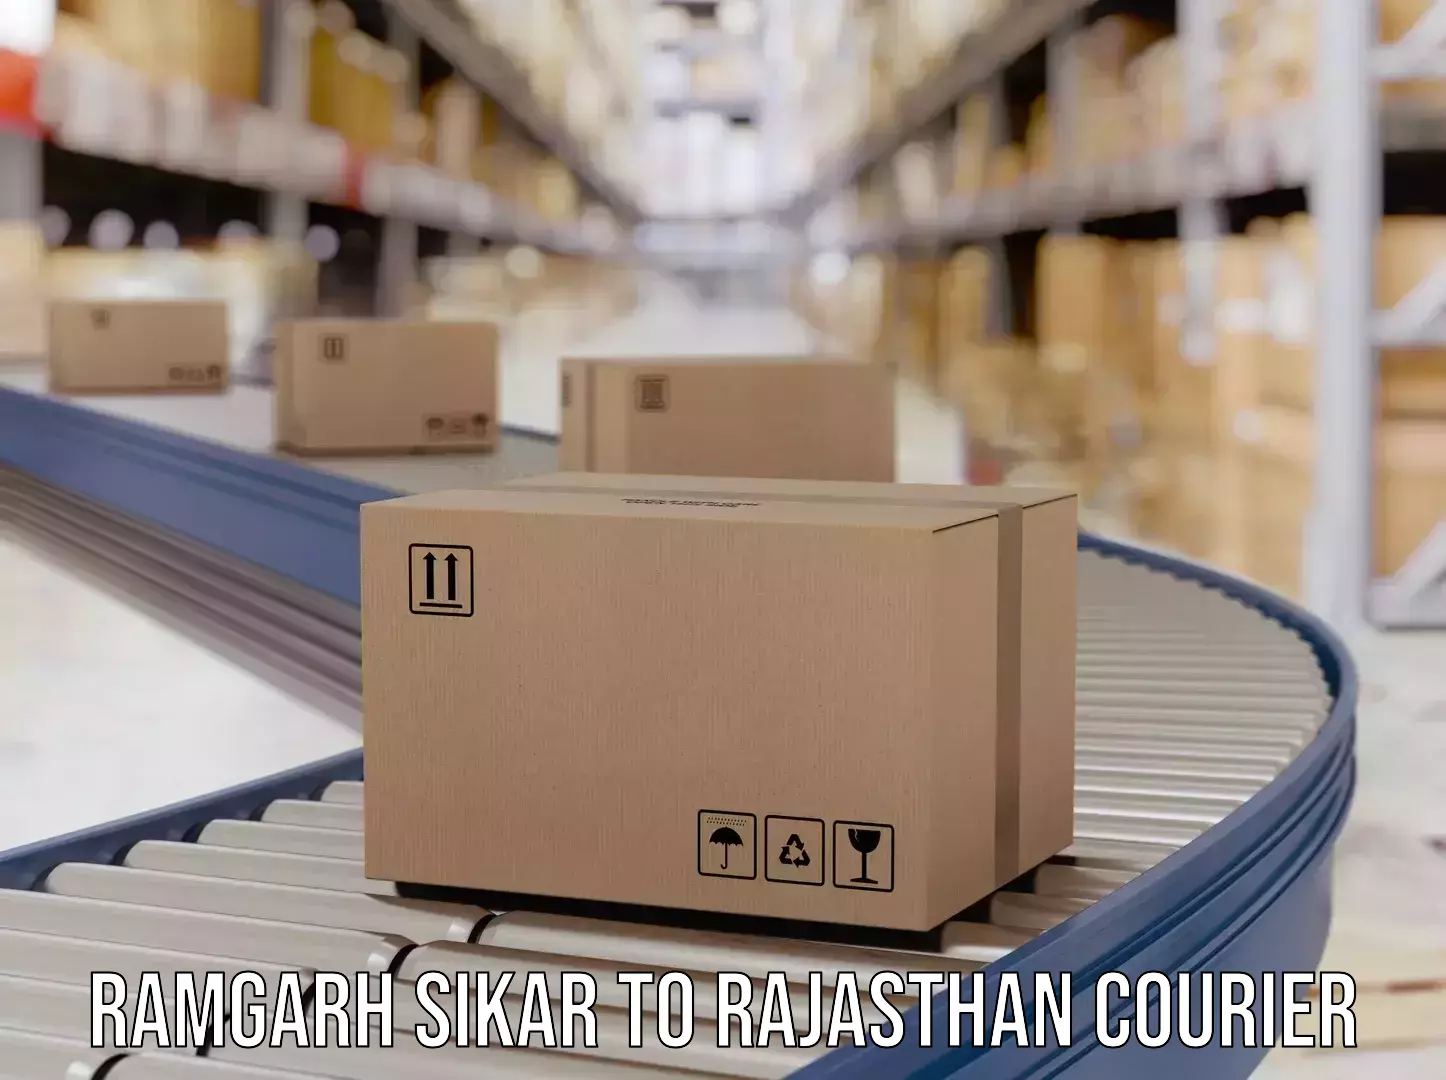 High-priority parcel service Ramgarh Sikar to Khandela Sikar